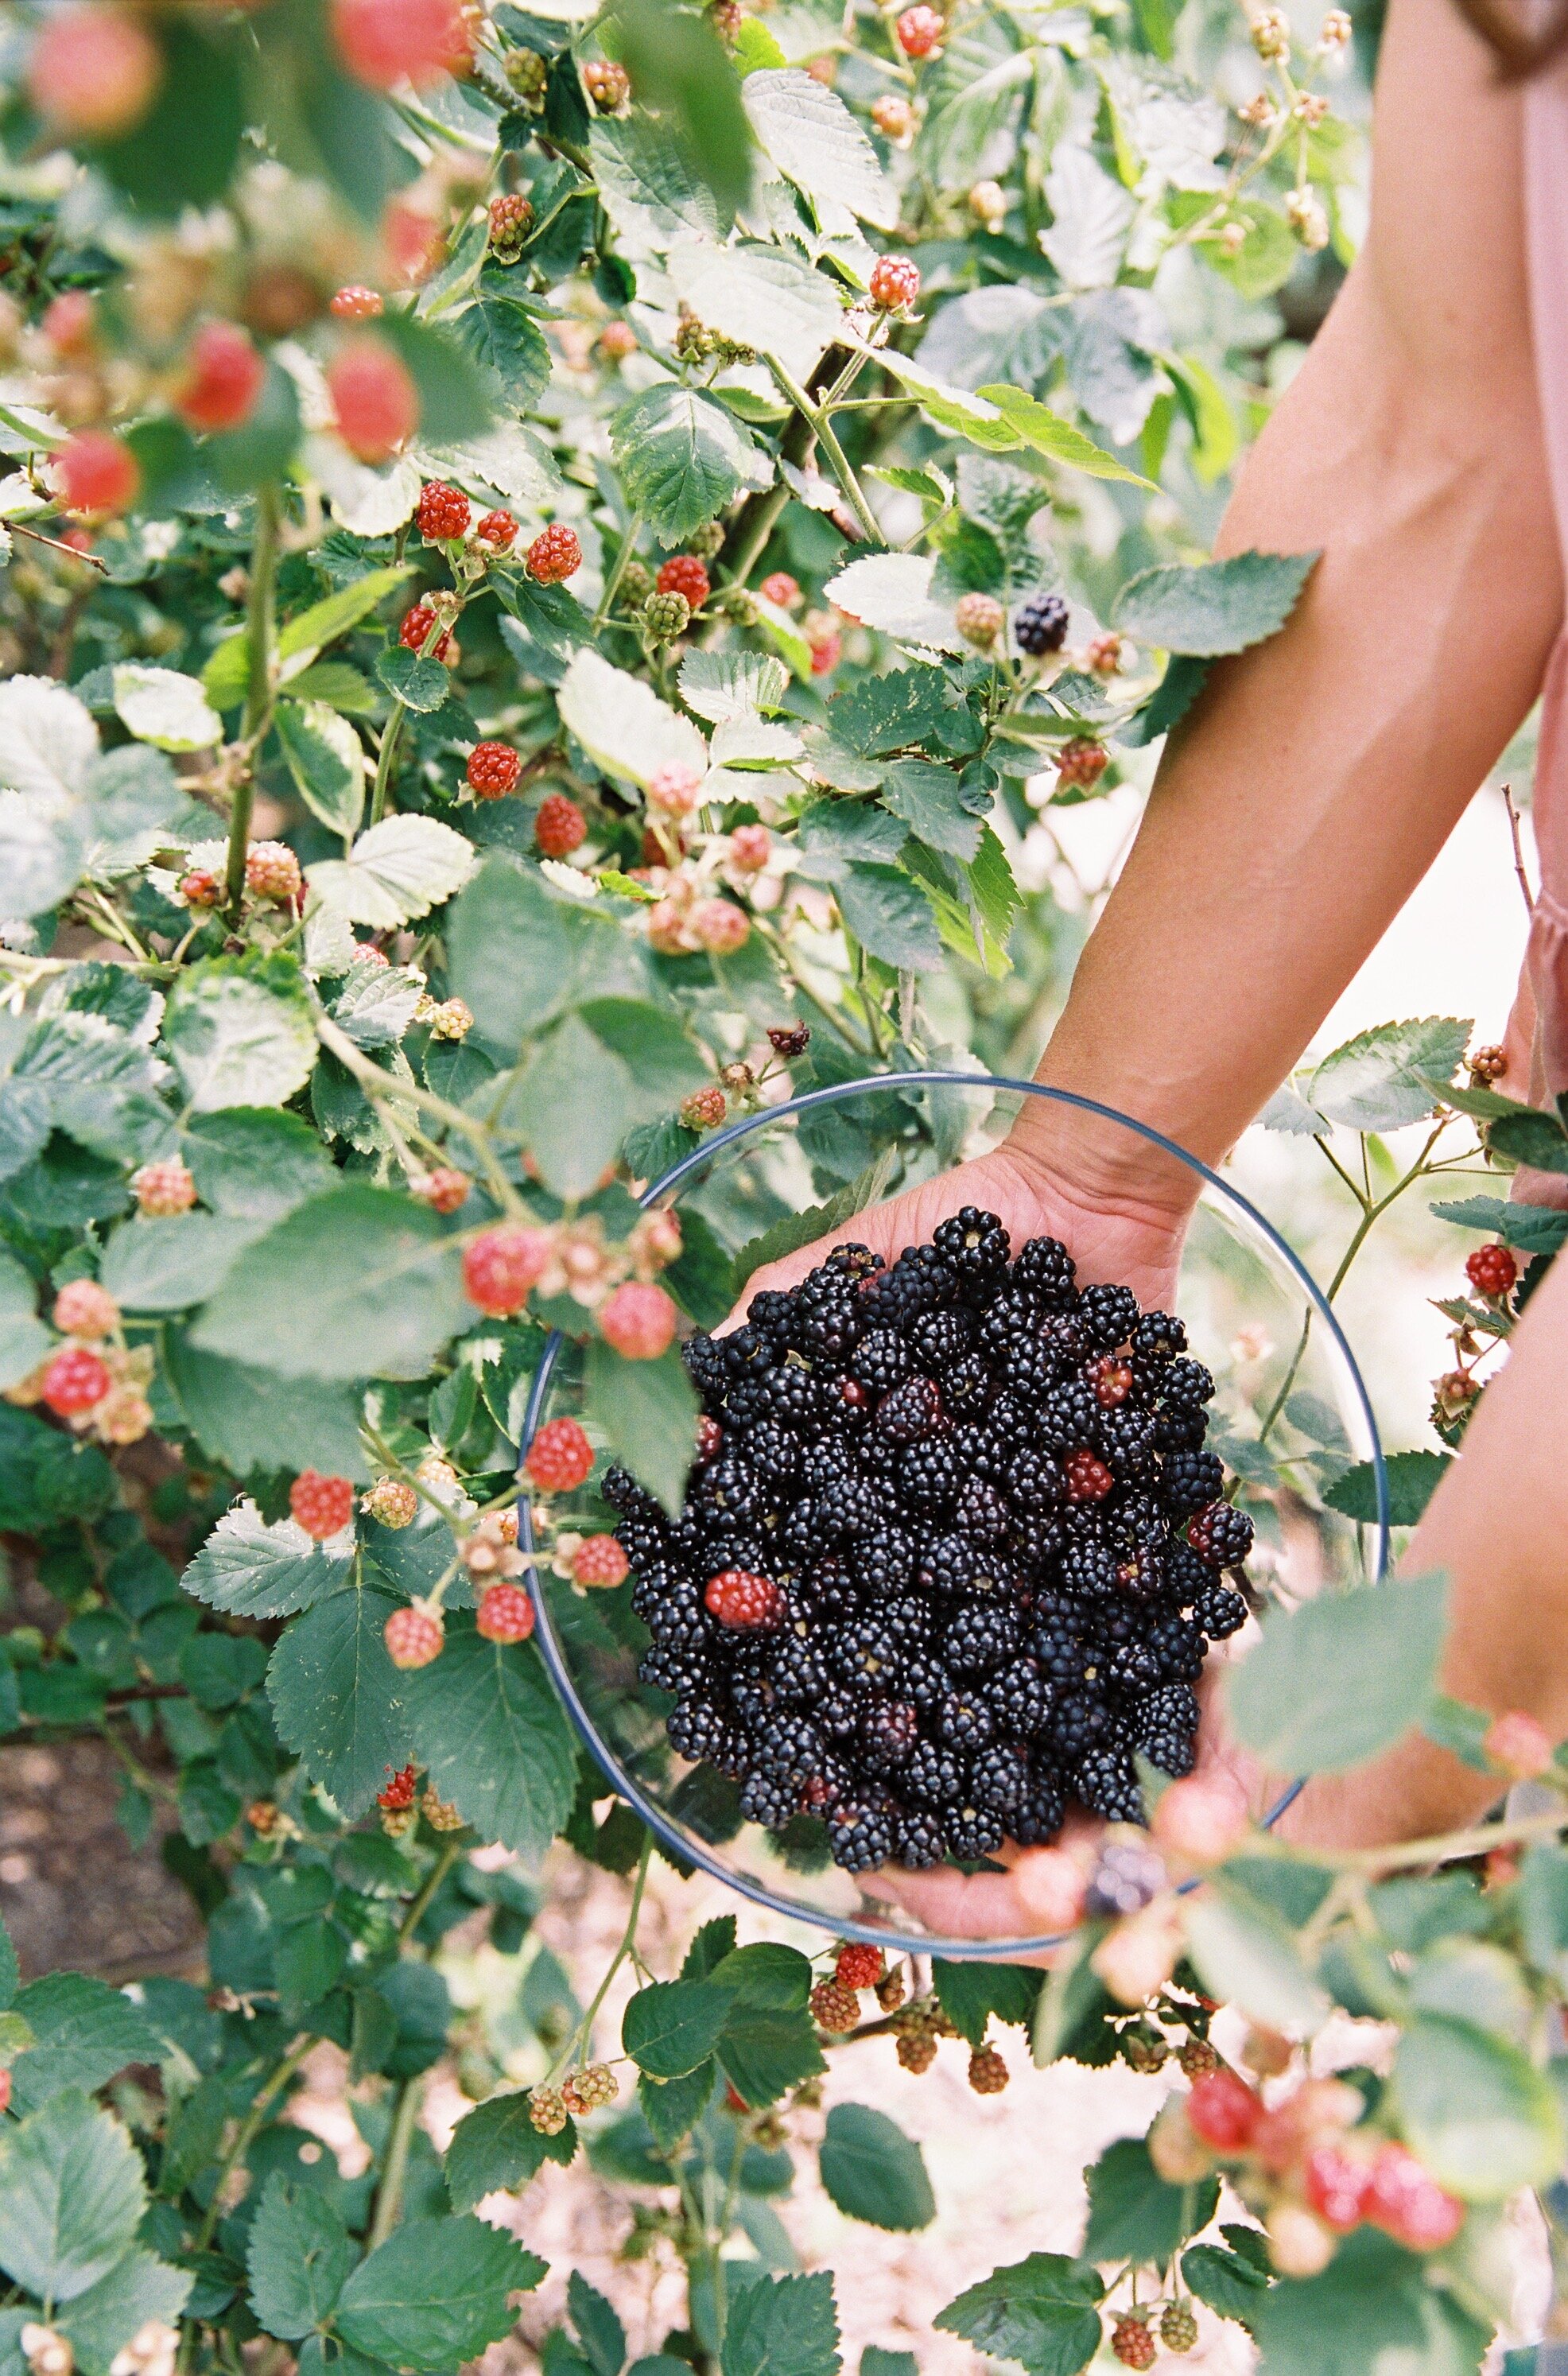 When Should You Plant Blackberries This Season?